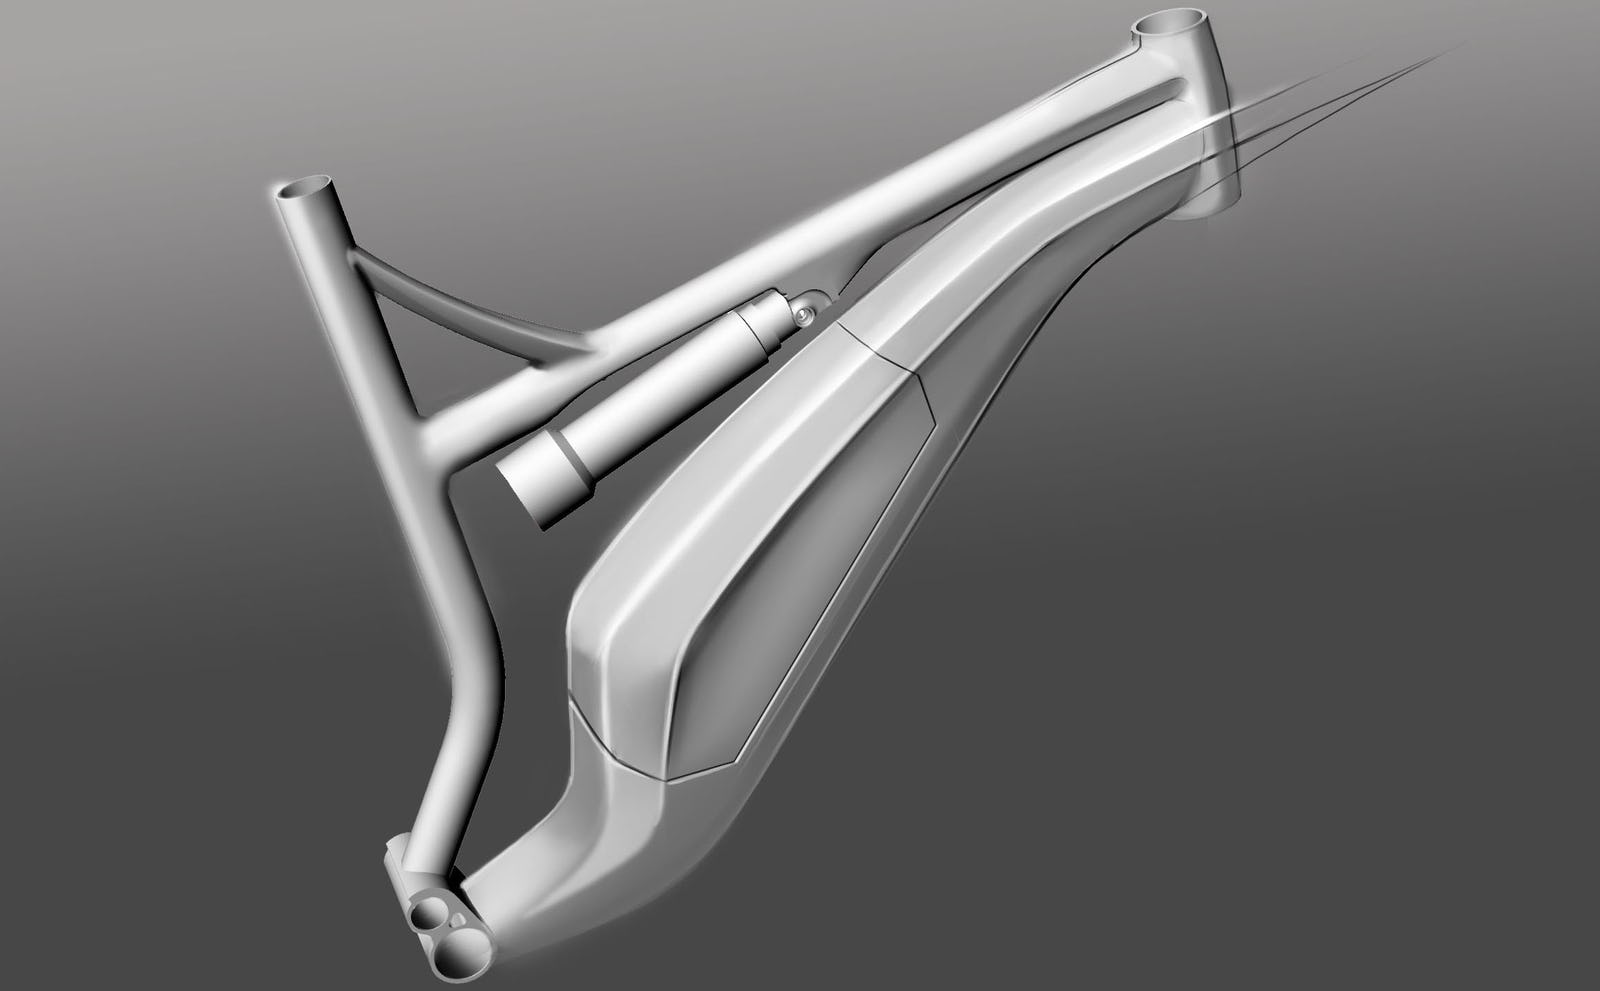 The open mold tube design is part of Bionx’s improved design esthetics. – Photo BionX